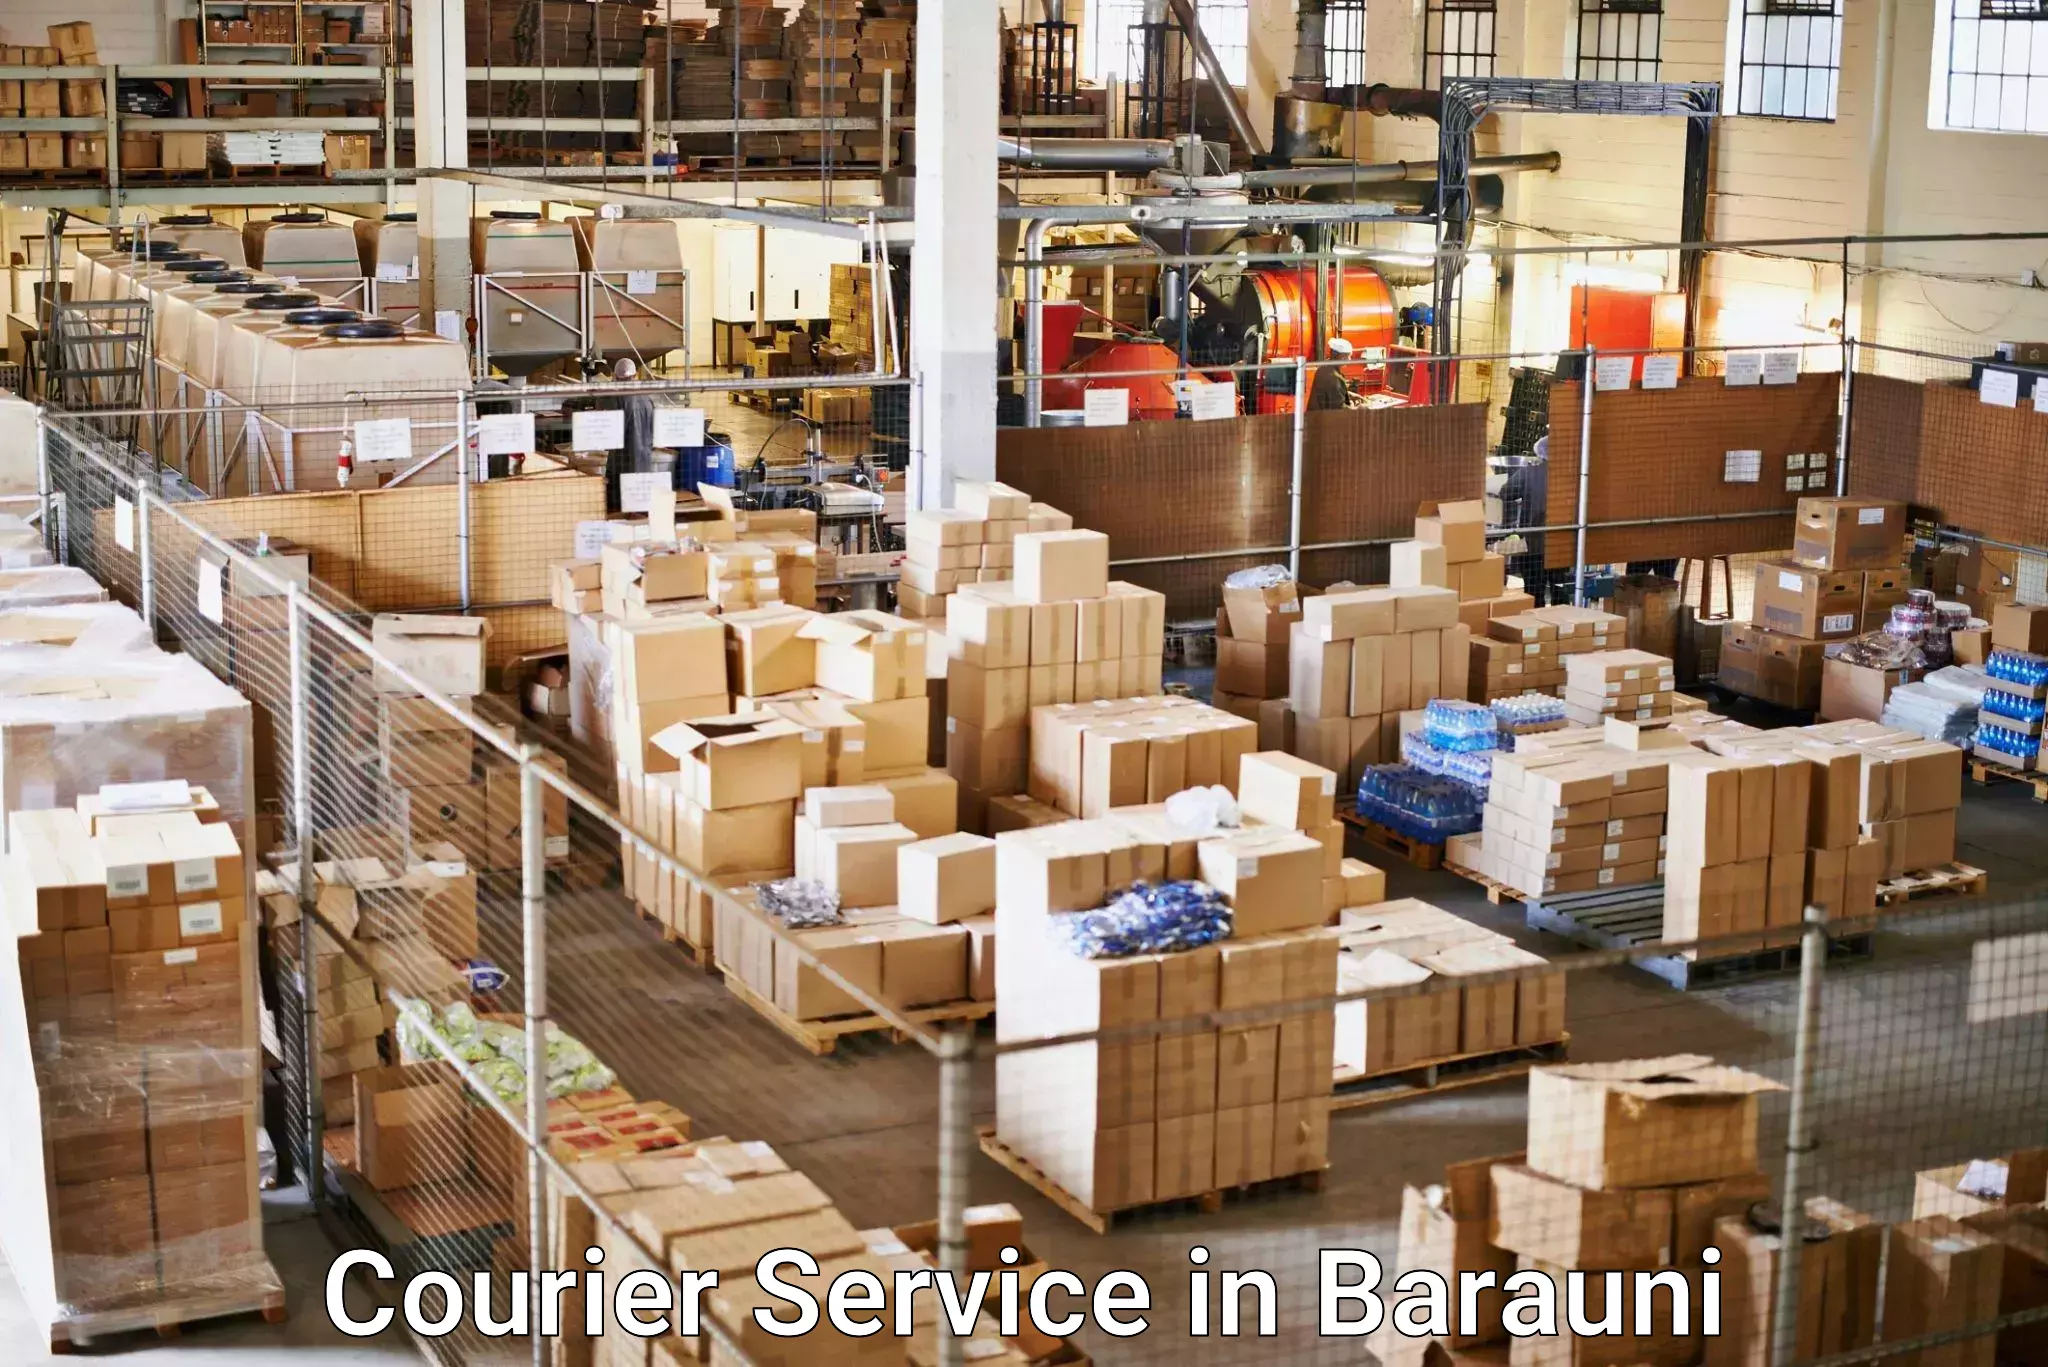 International parcel service in Barauni